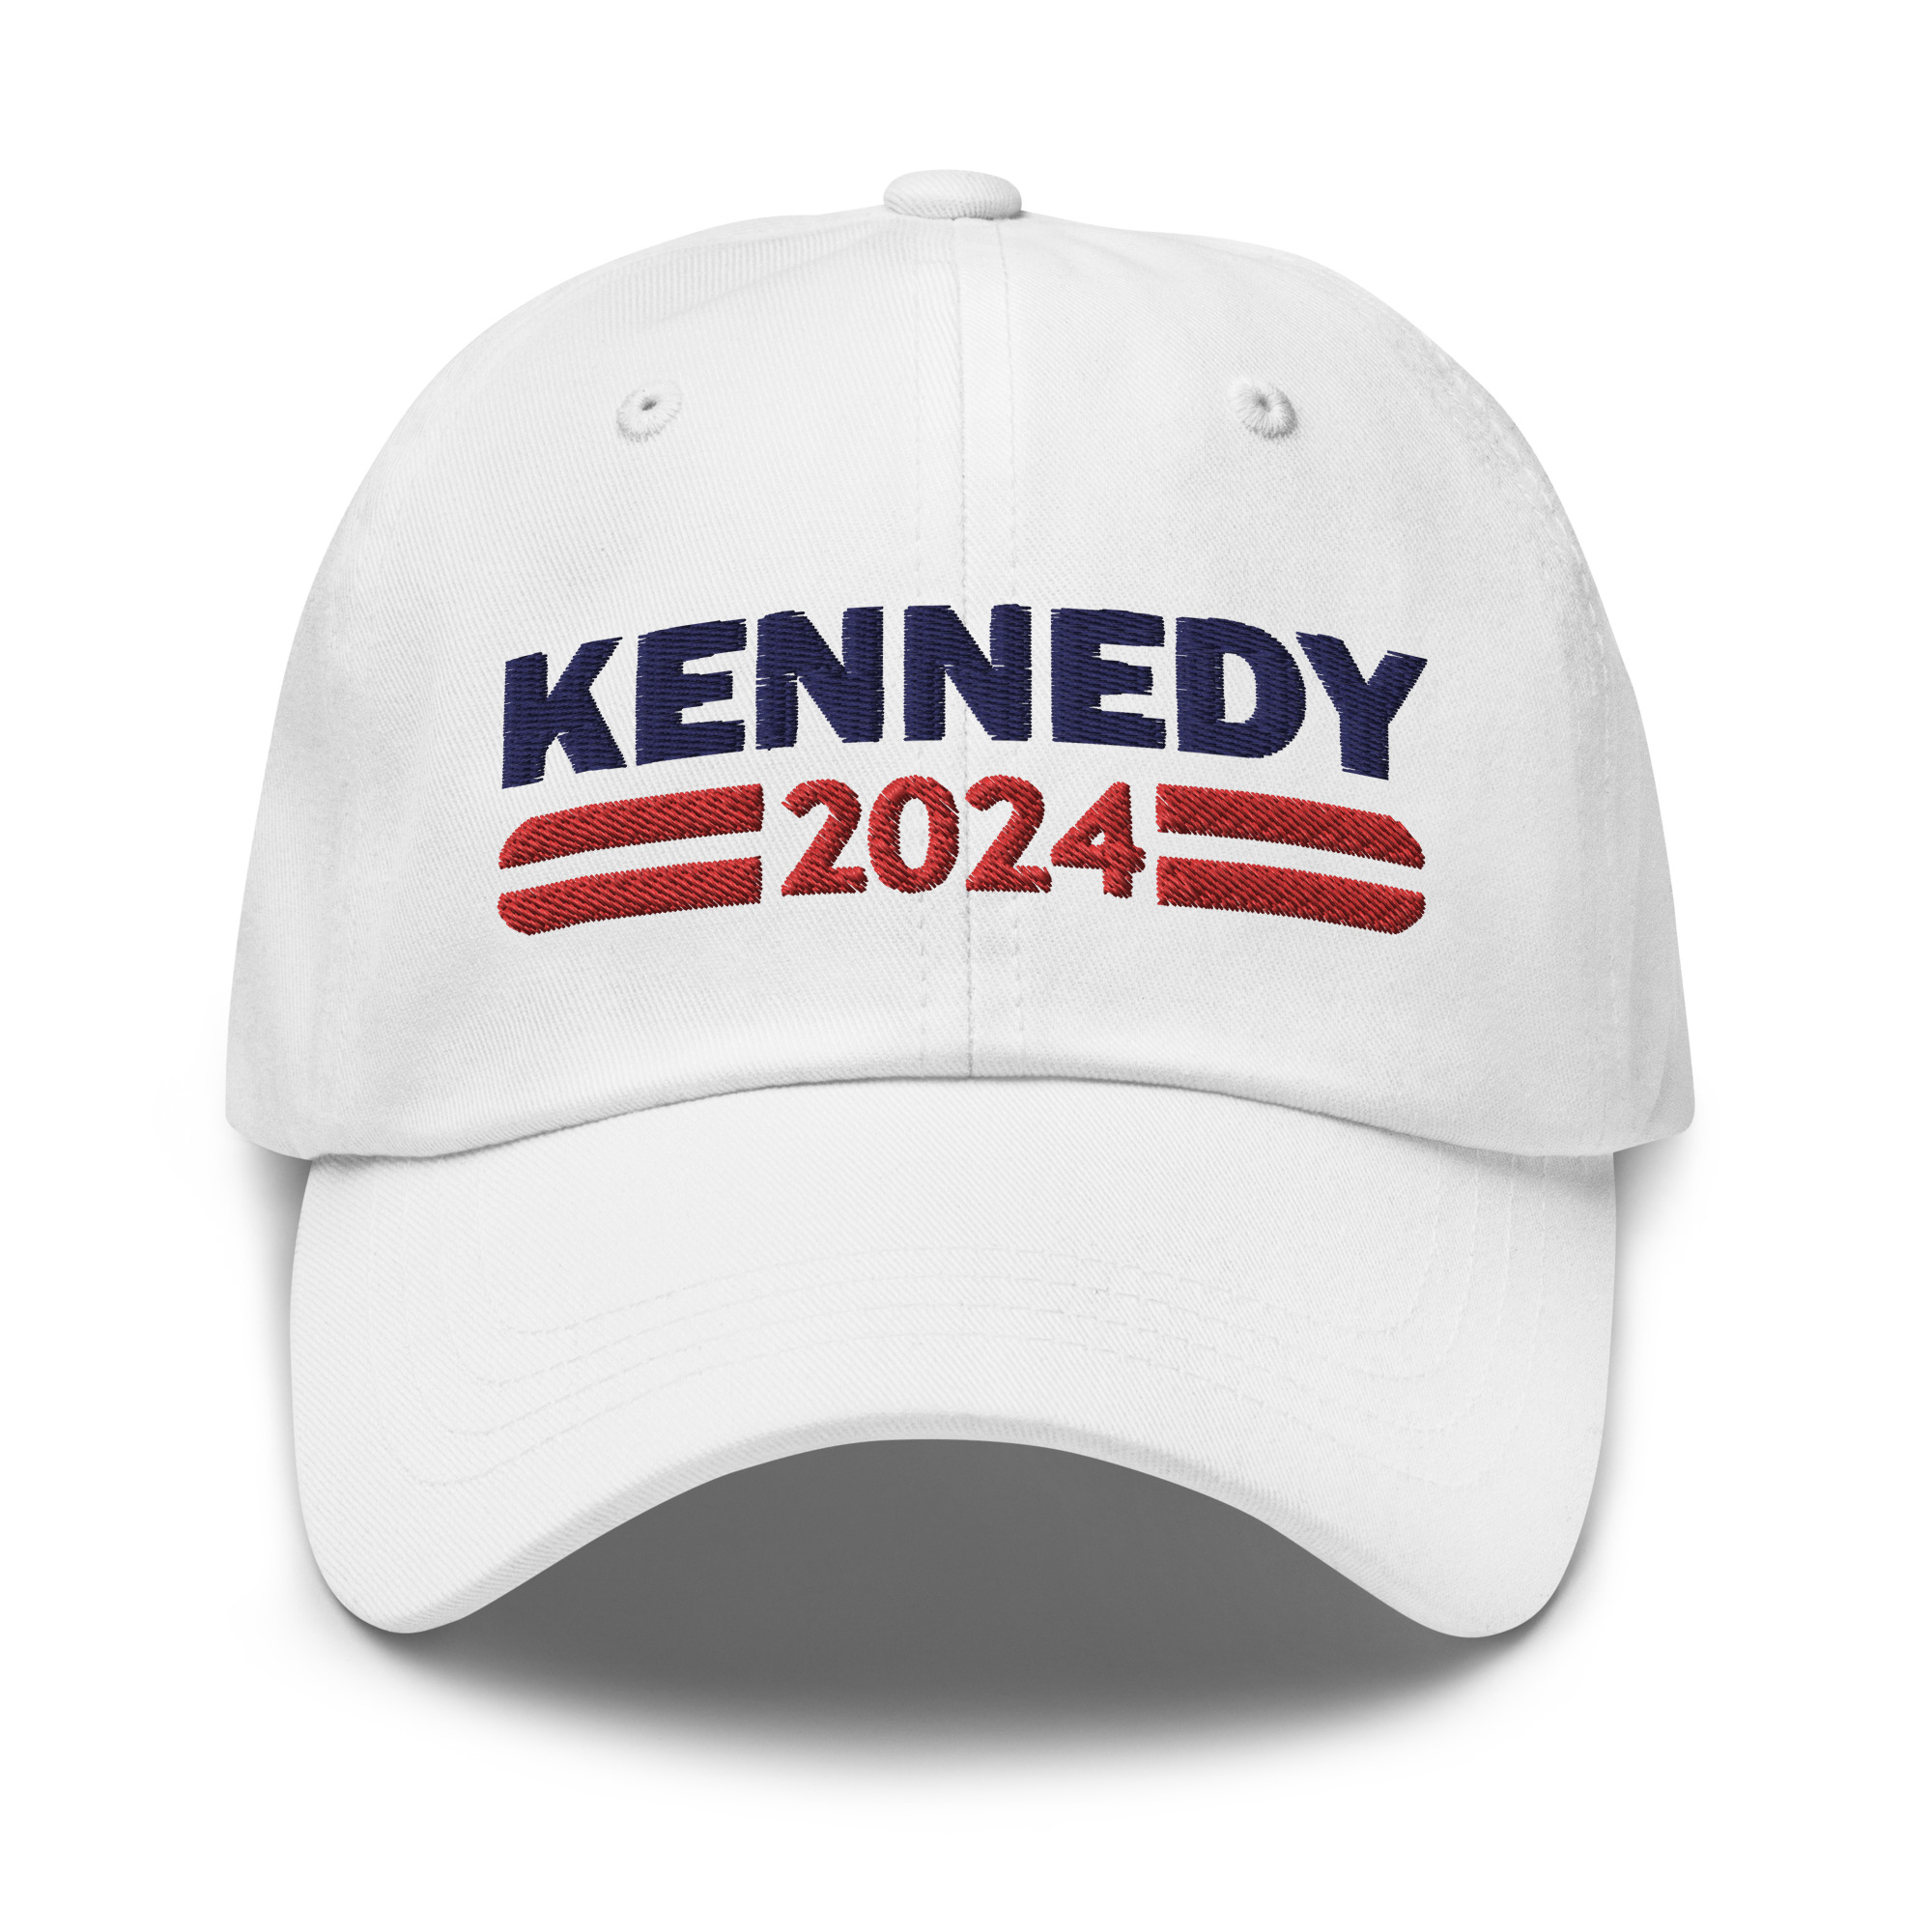 Robert Kennedy 2024 Classic Dad Hat White Front 645e77dea97cb 